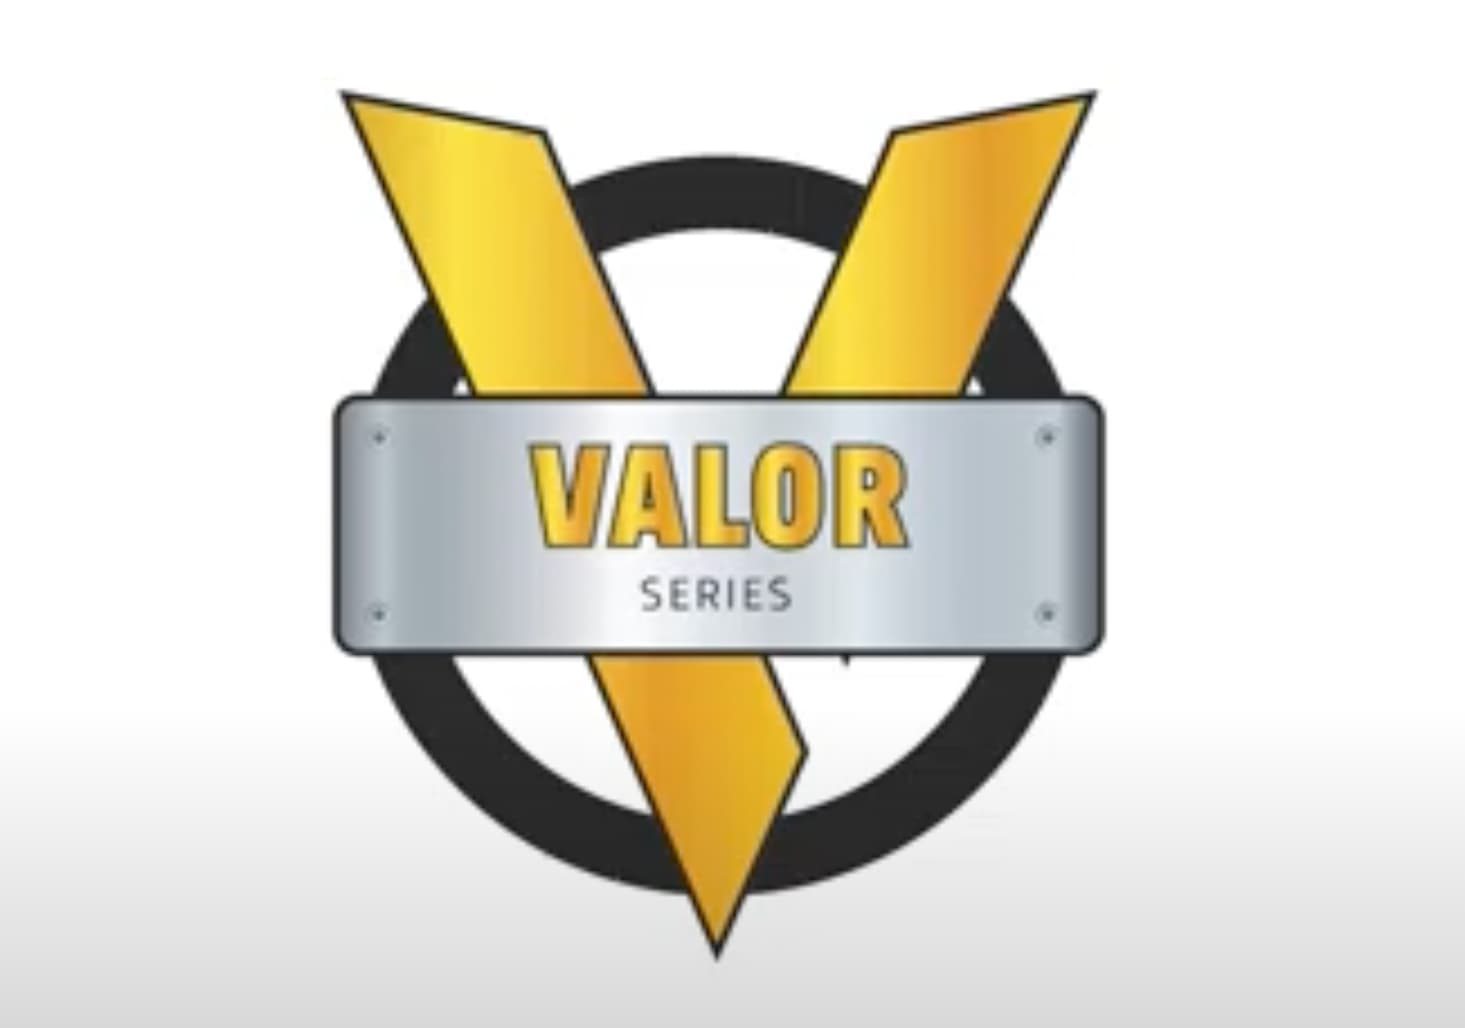 Servicing the Main Air Valve for a Valor AODD Pump